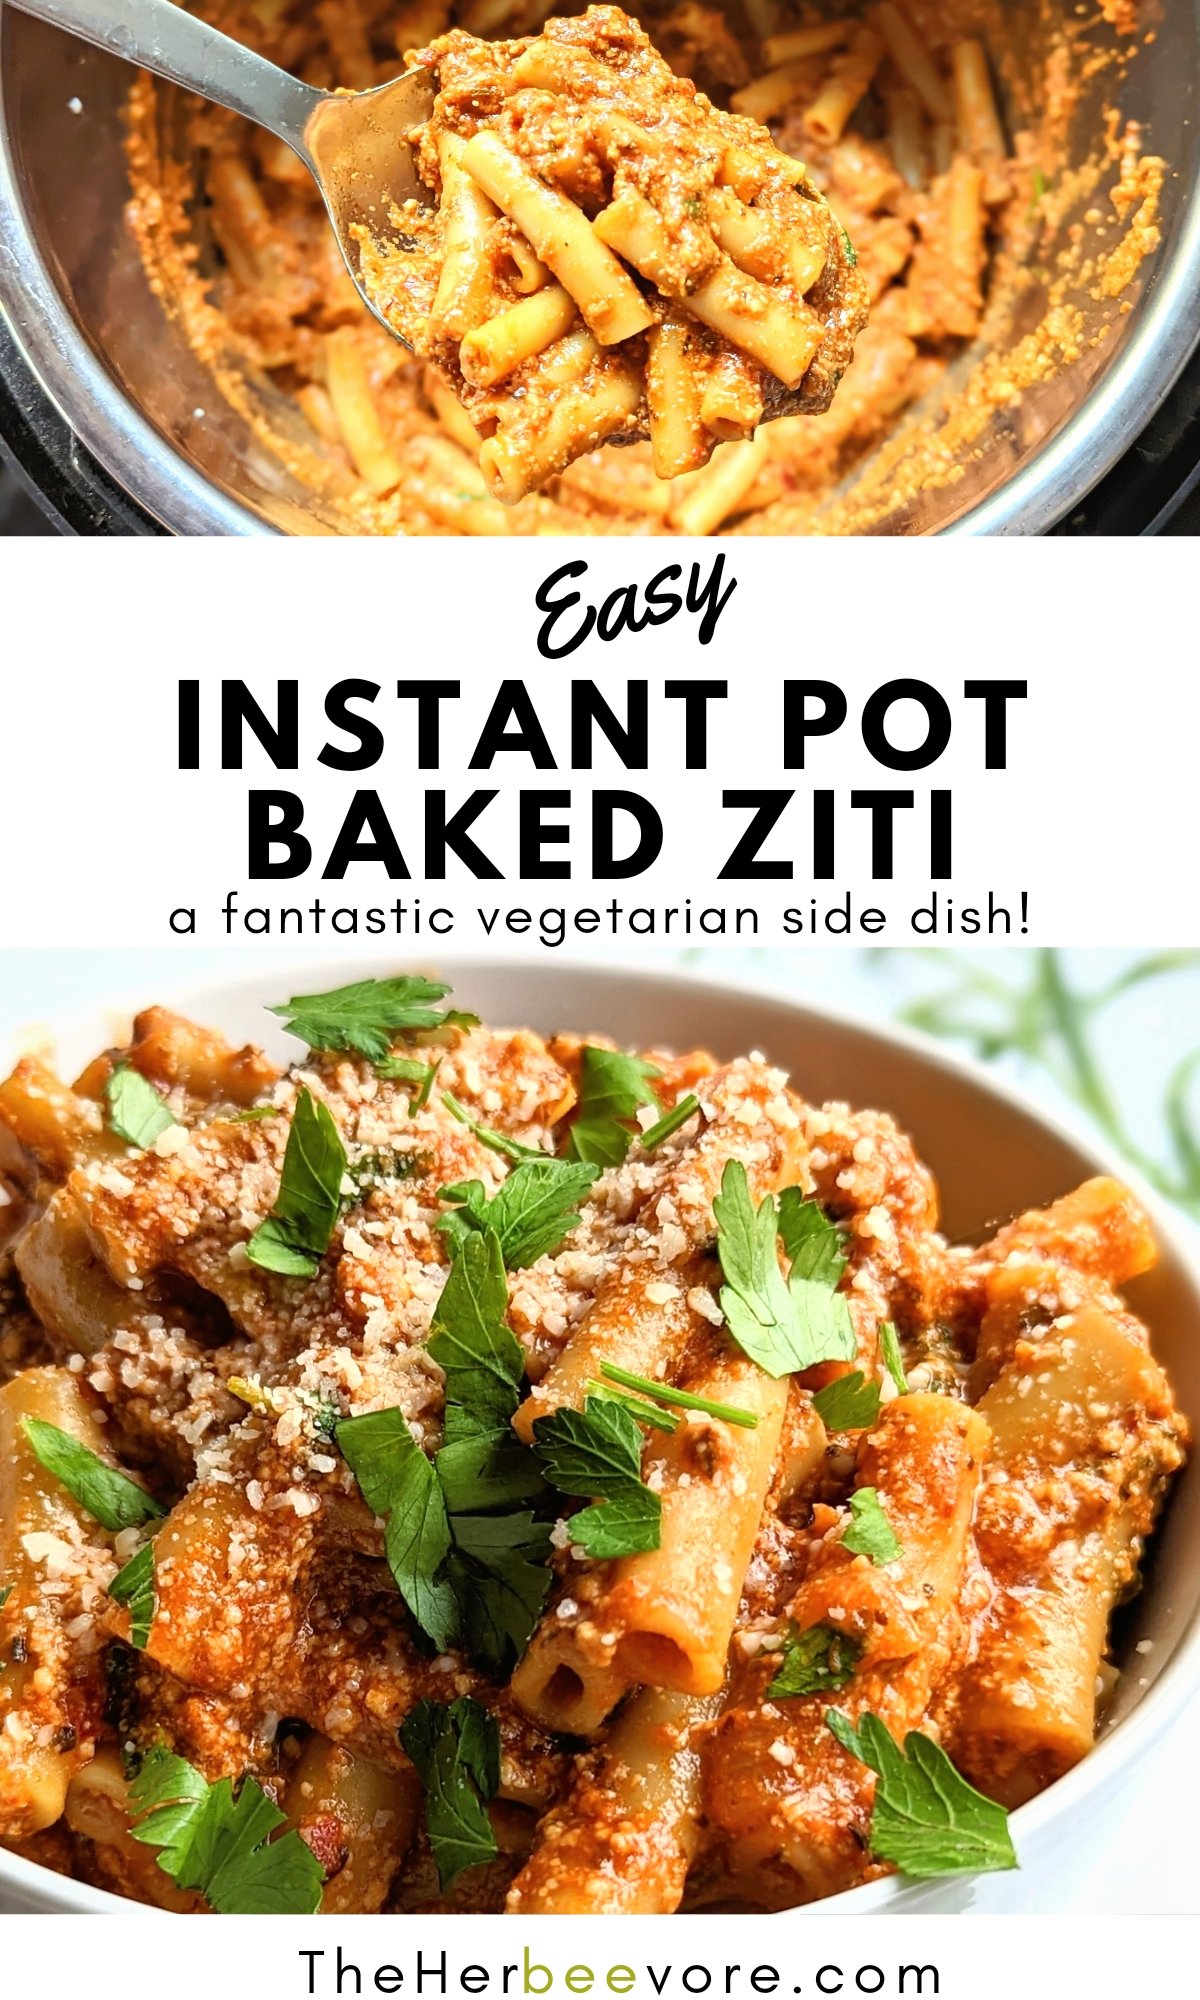 vegetarian instant pot baked ziti recipe healthy pasta gluten free vegan option no cheese healthy tvp texture vegetable protein pasta recipes